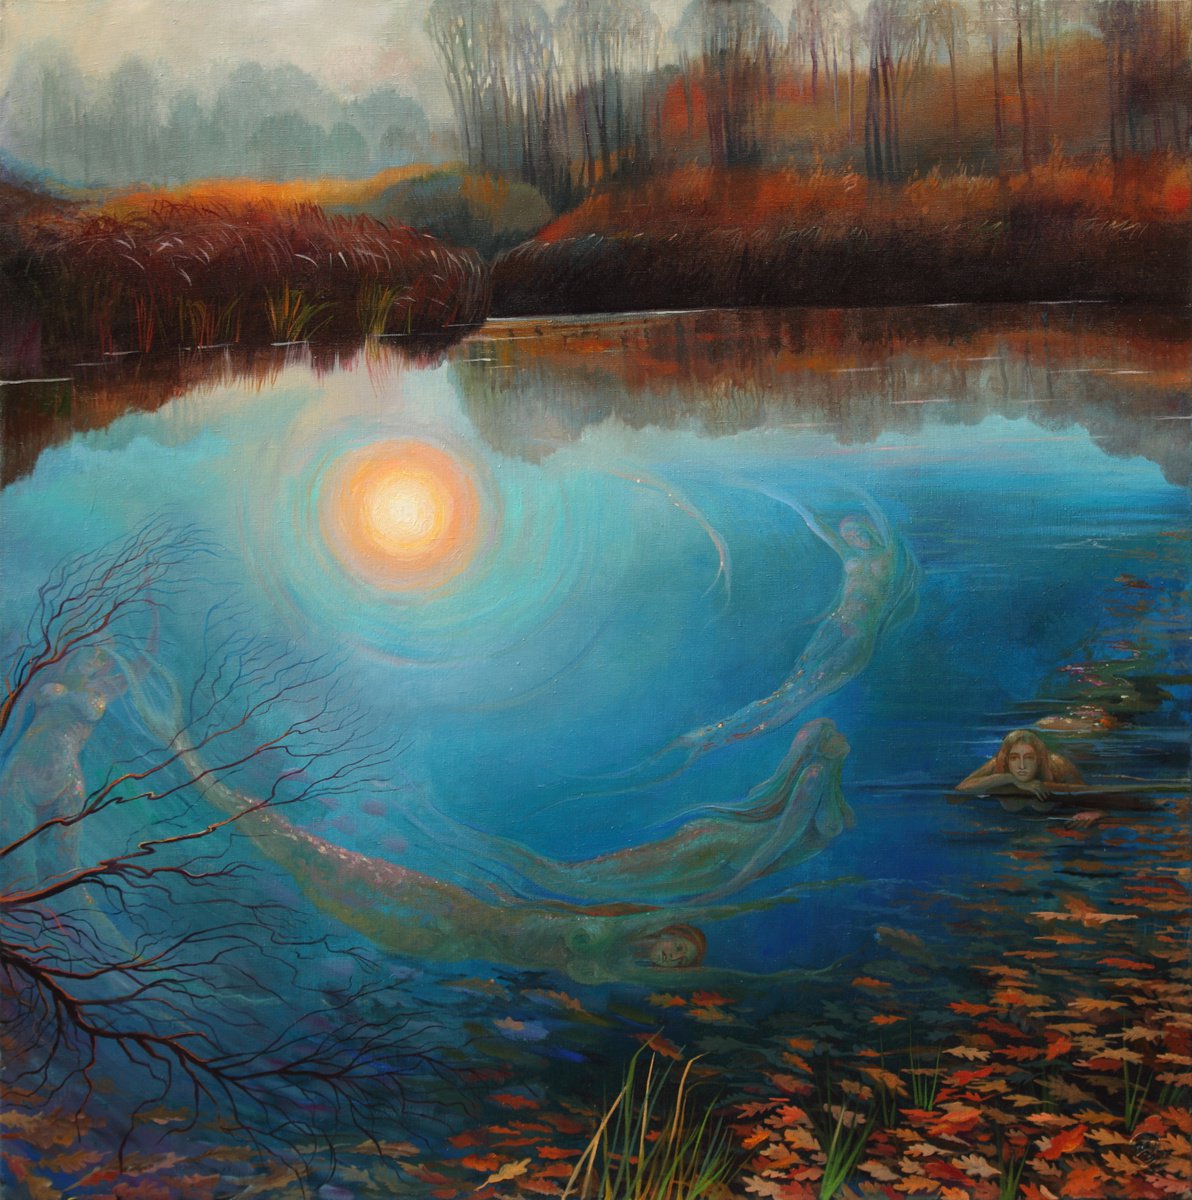 Mermaid pond (Still waters run Deep) by Sergey Lesnikov